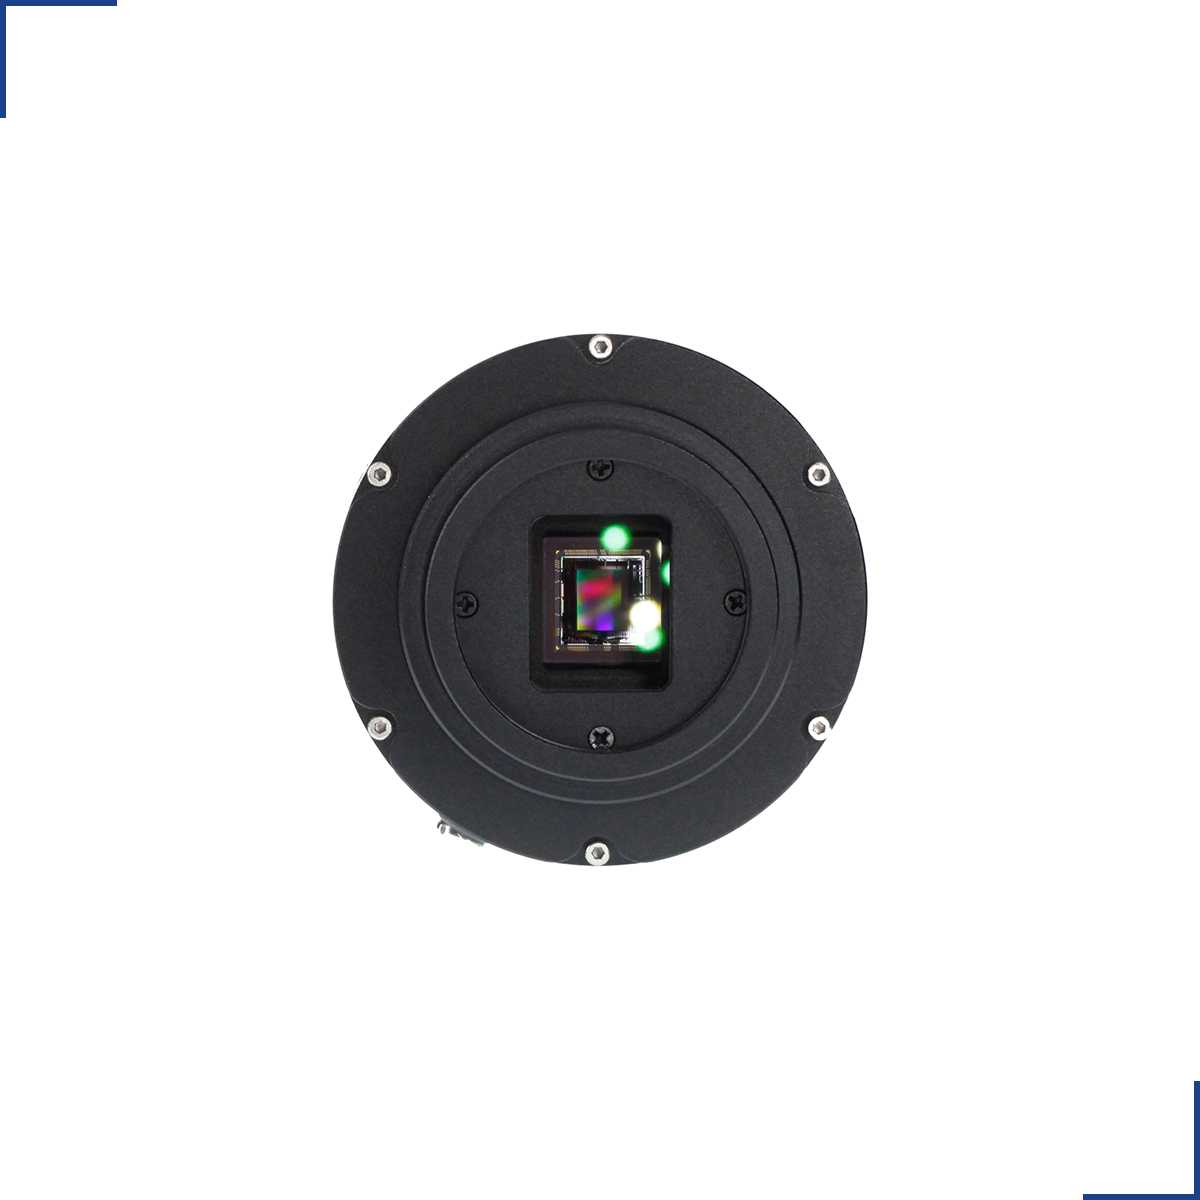 QHYCCD astrocamera ASI Sony IMX deepsky 
天文相机 深空相机 制冷相机